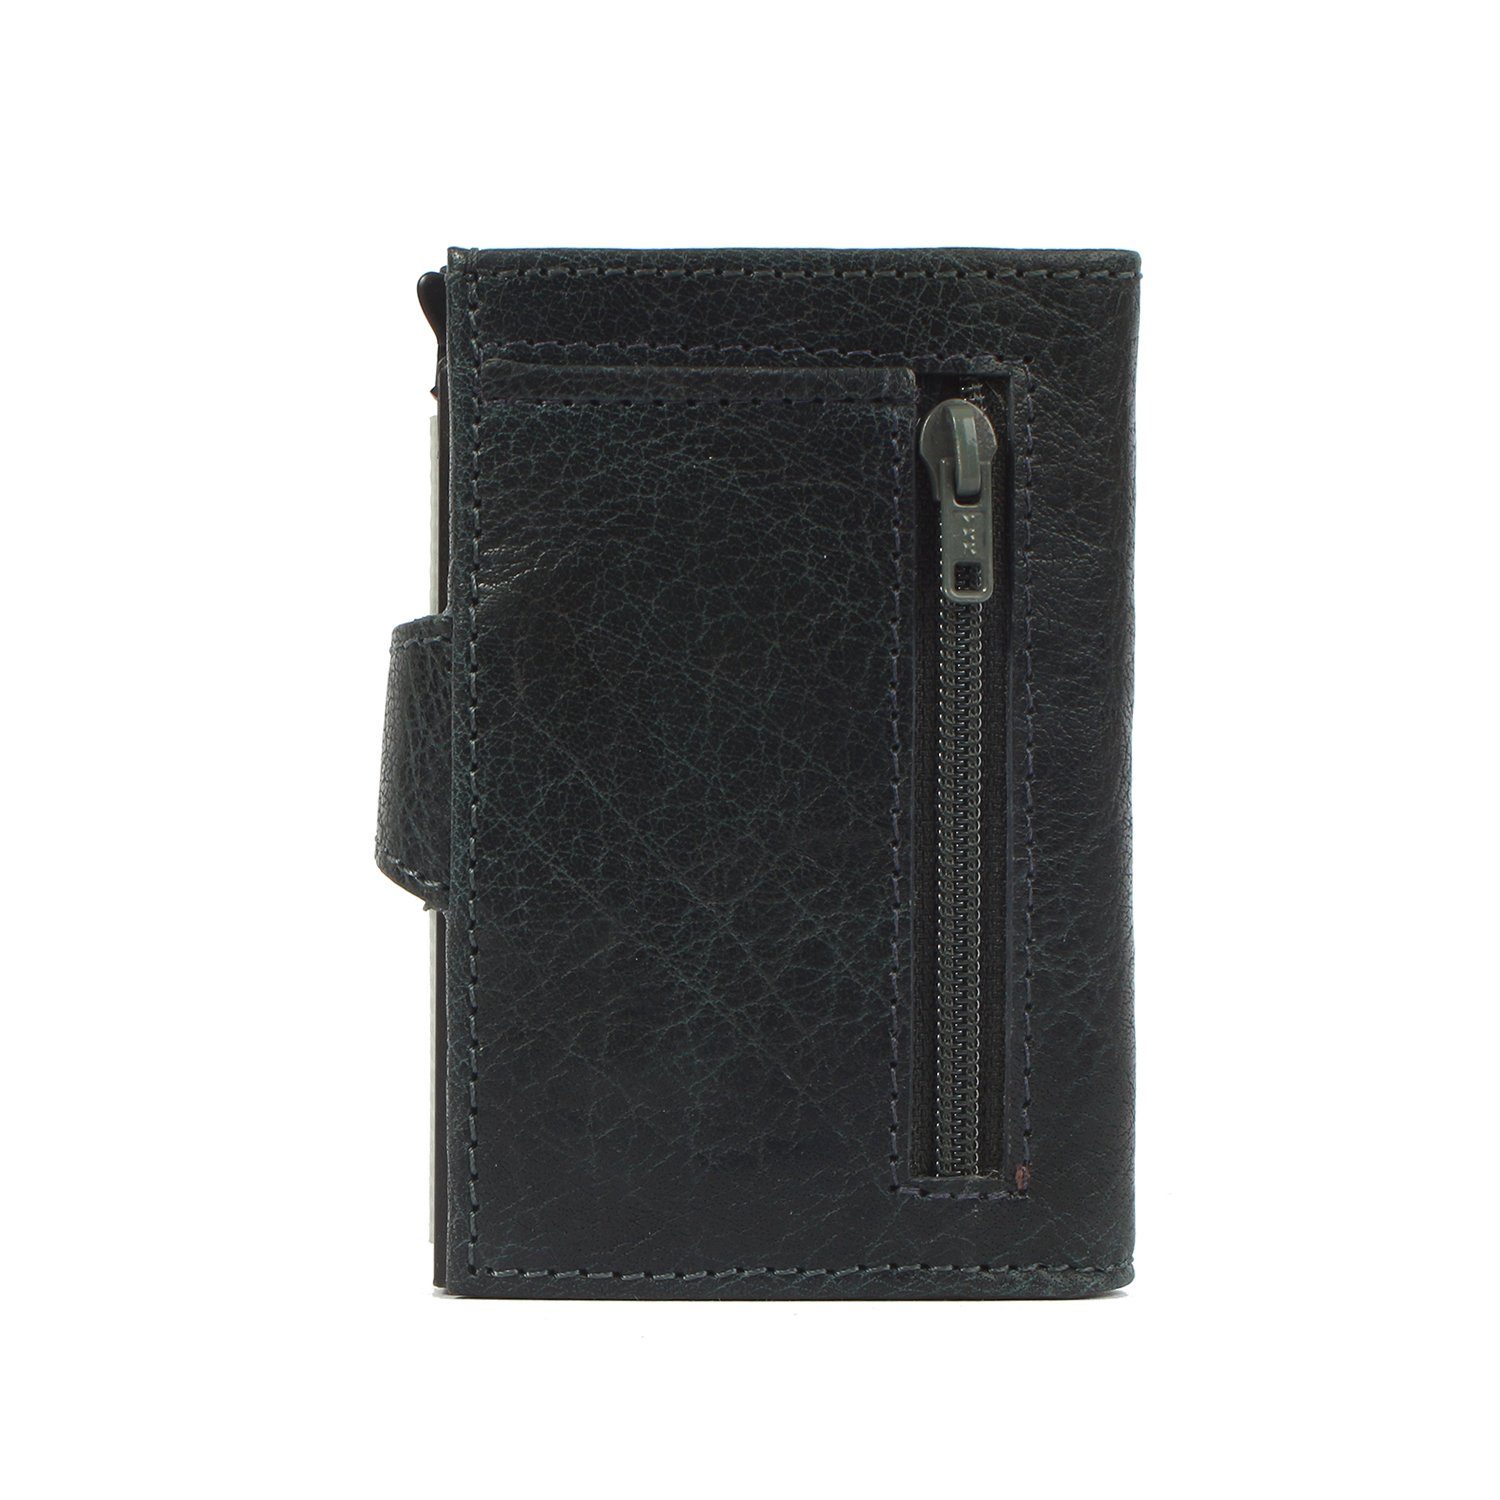 Kreditkartenbörse Margelisch single Mini leather, aus steelblue noonyu Upcycling Geldbörse Leder